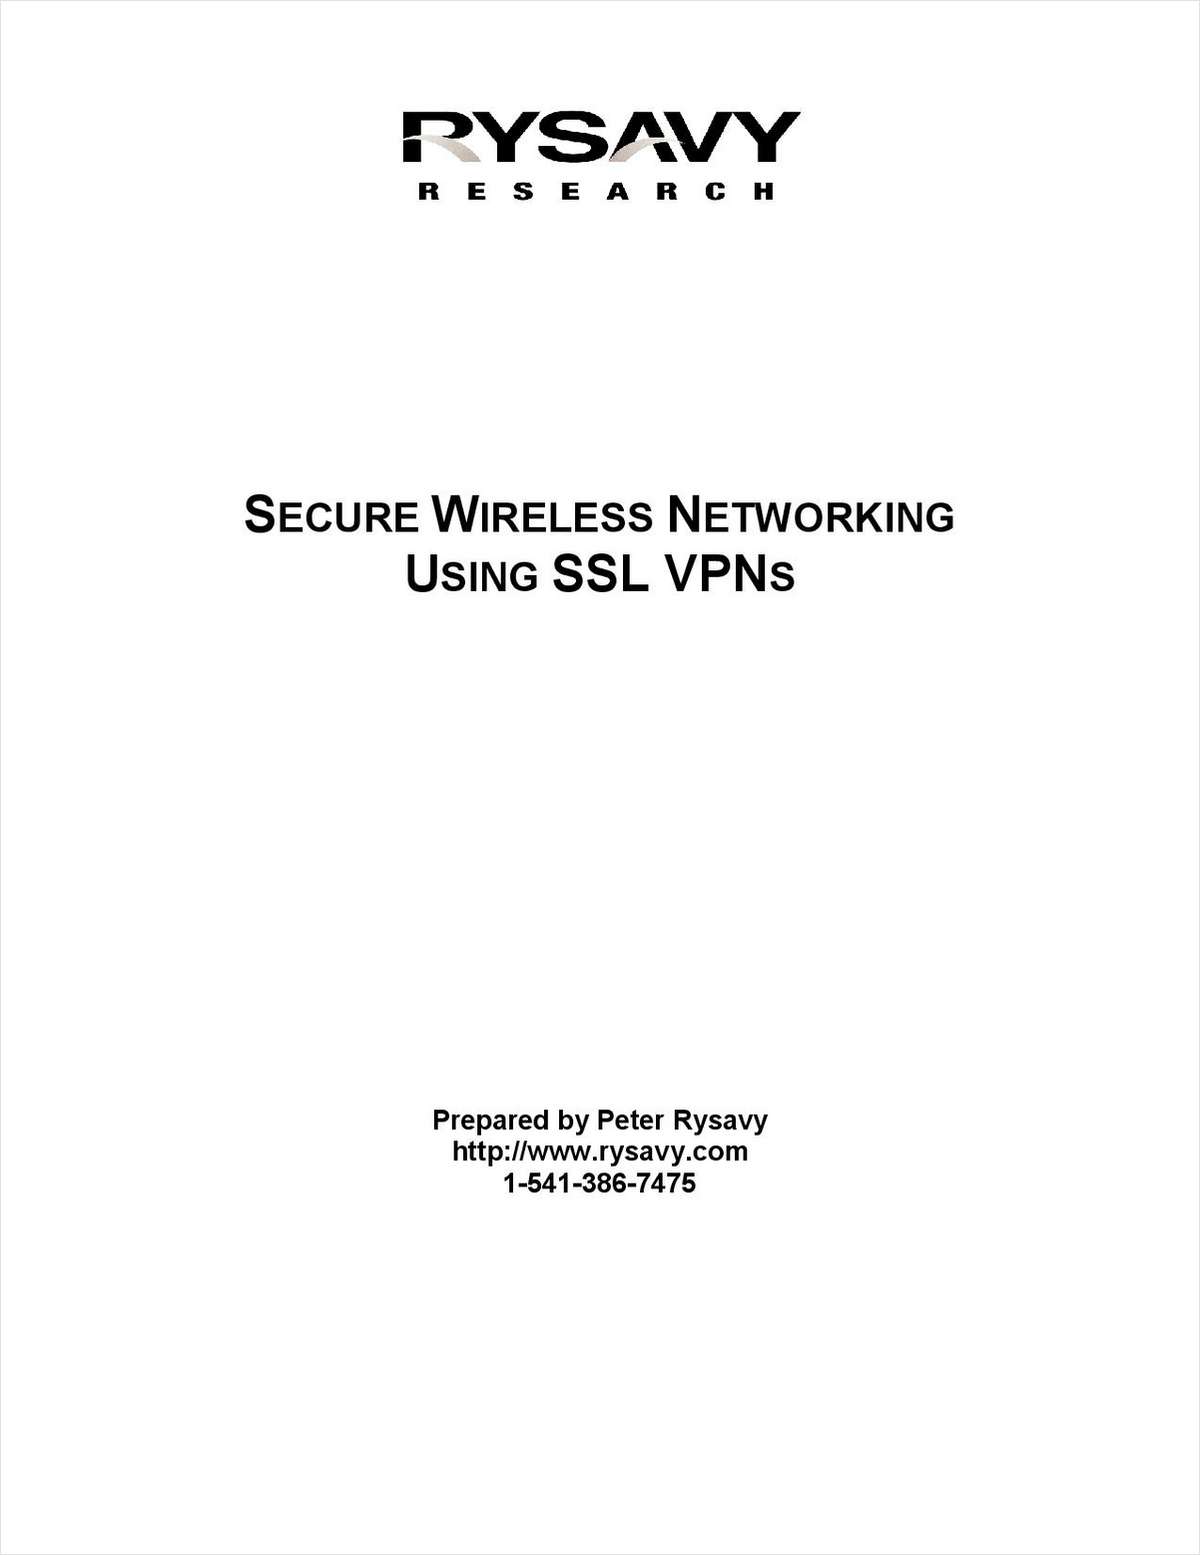 Secure Wireless Networking Using SSL VPNs